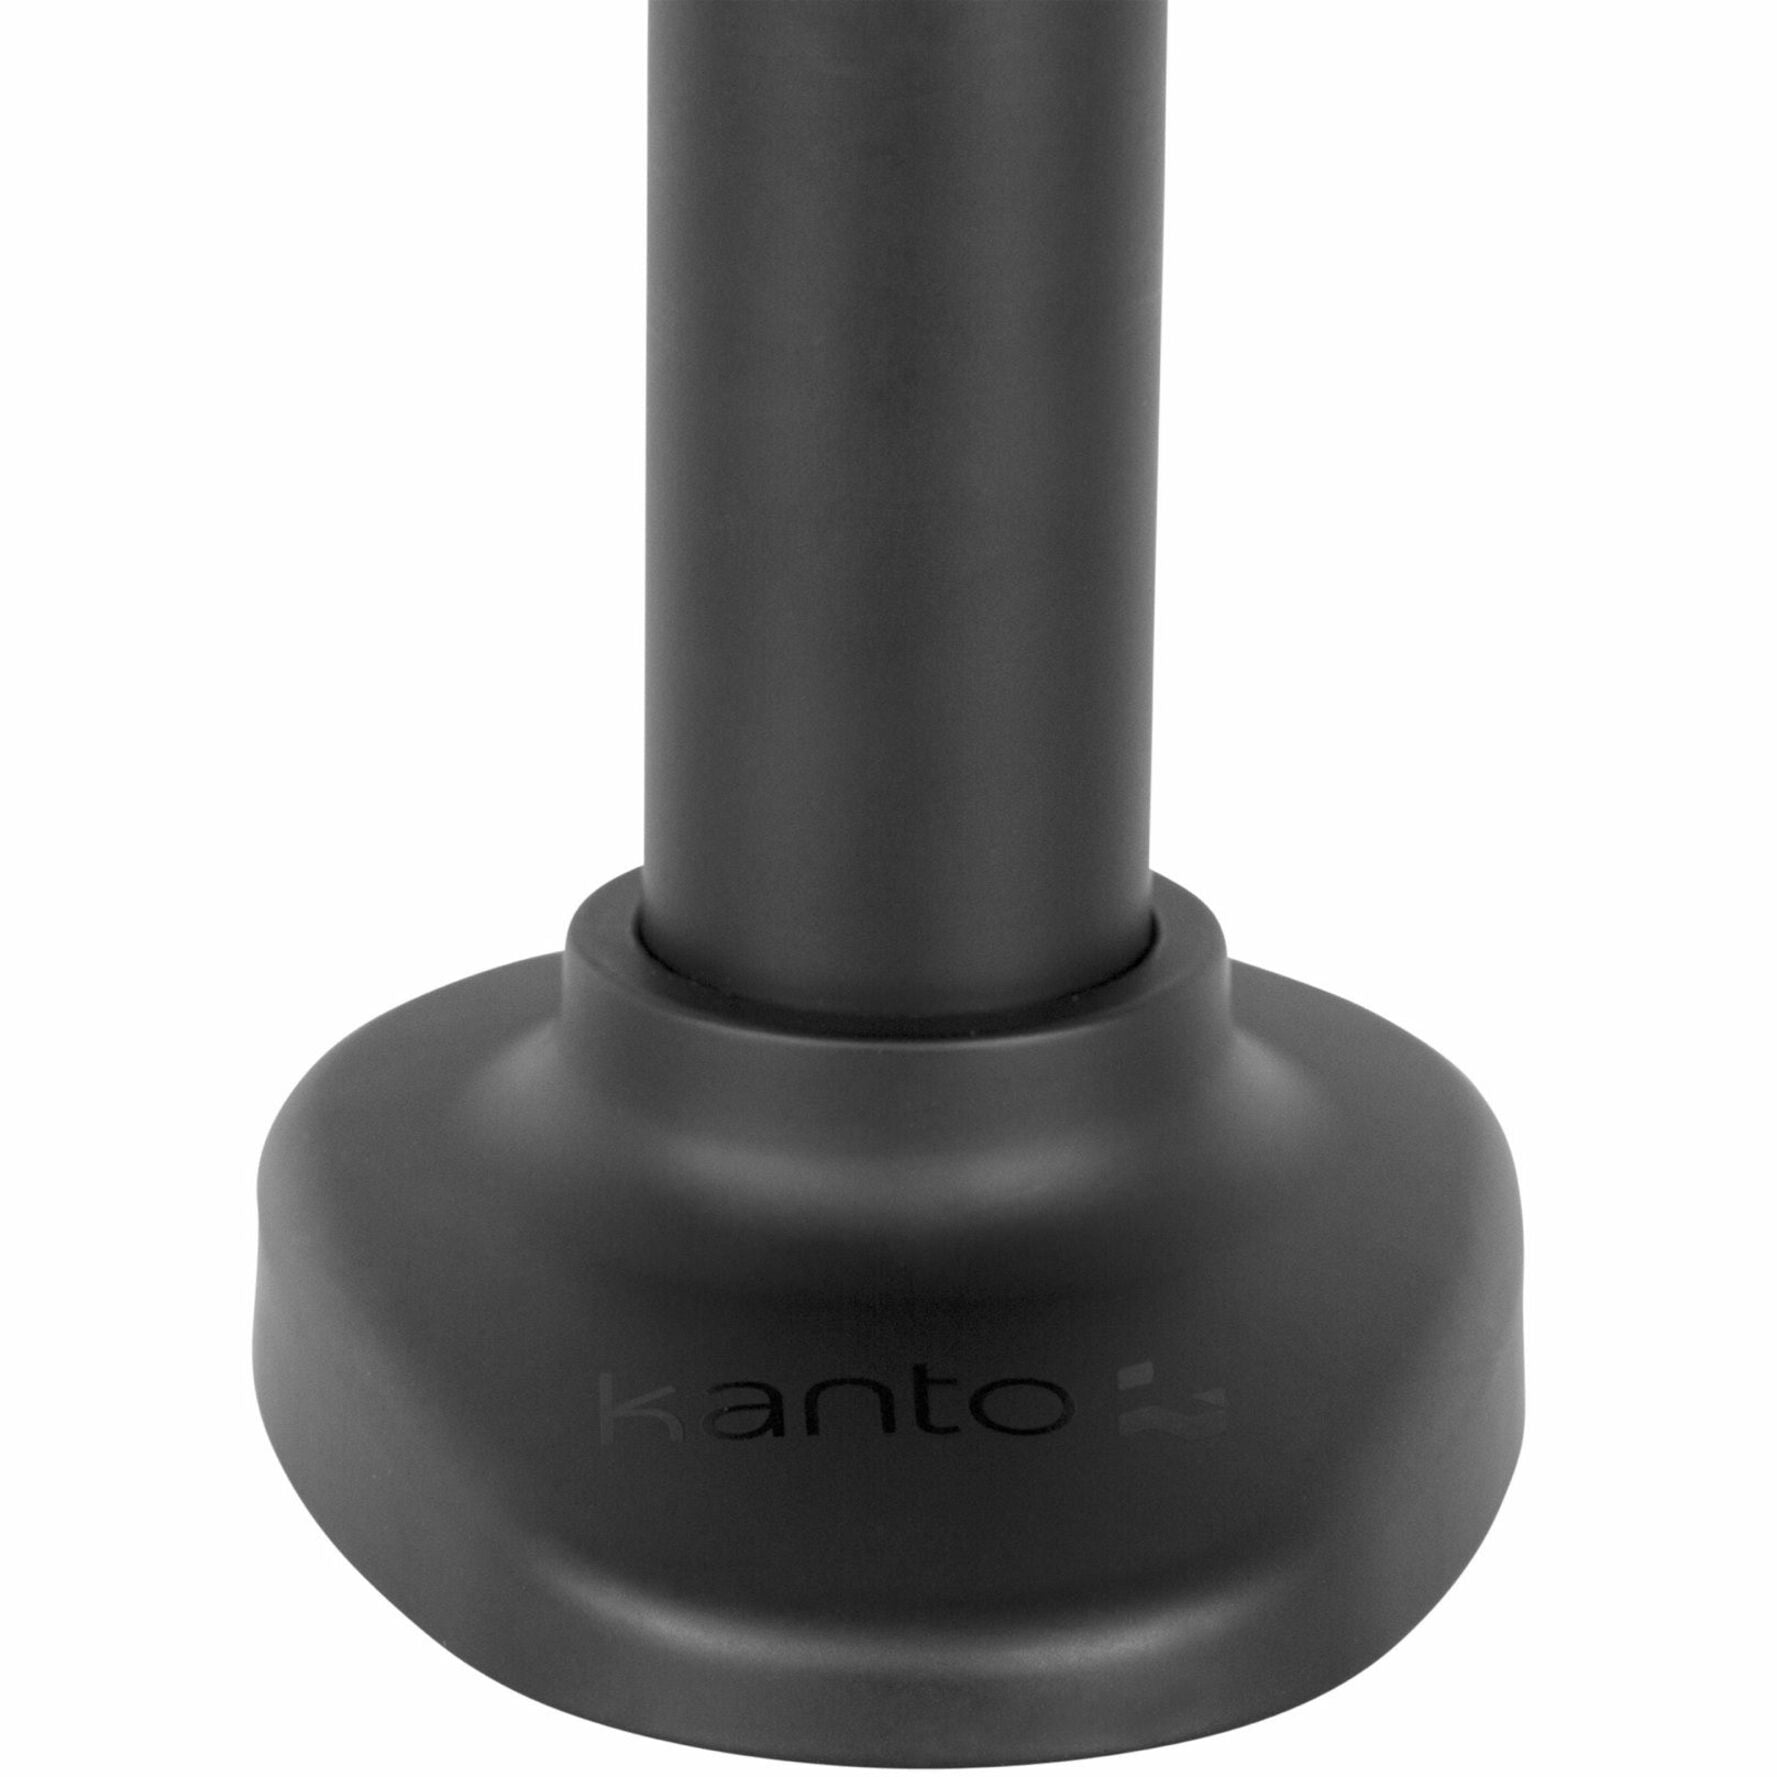 Kanto DM1000 Desktop Mount Monitor Arm - Black [Discontinued]